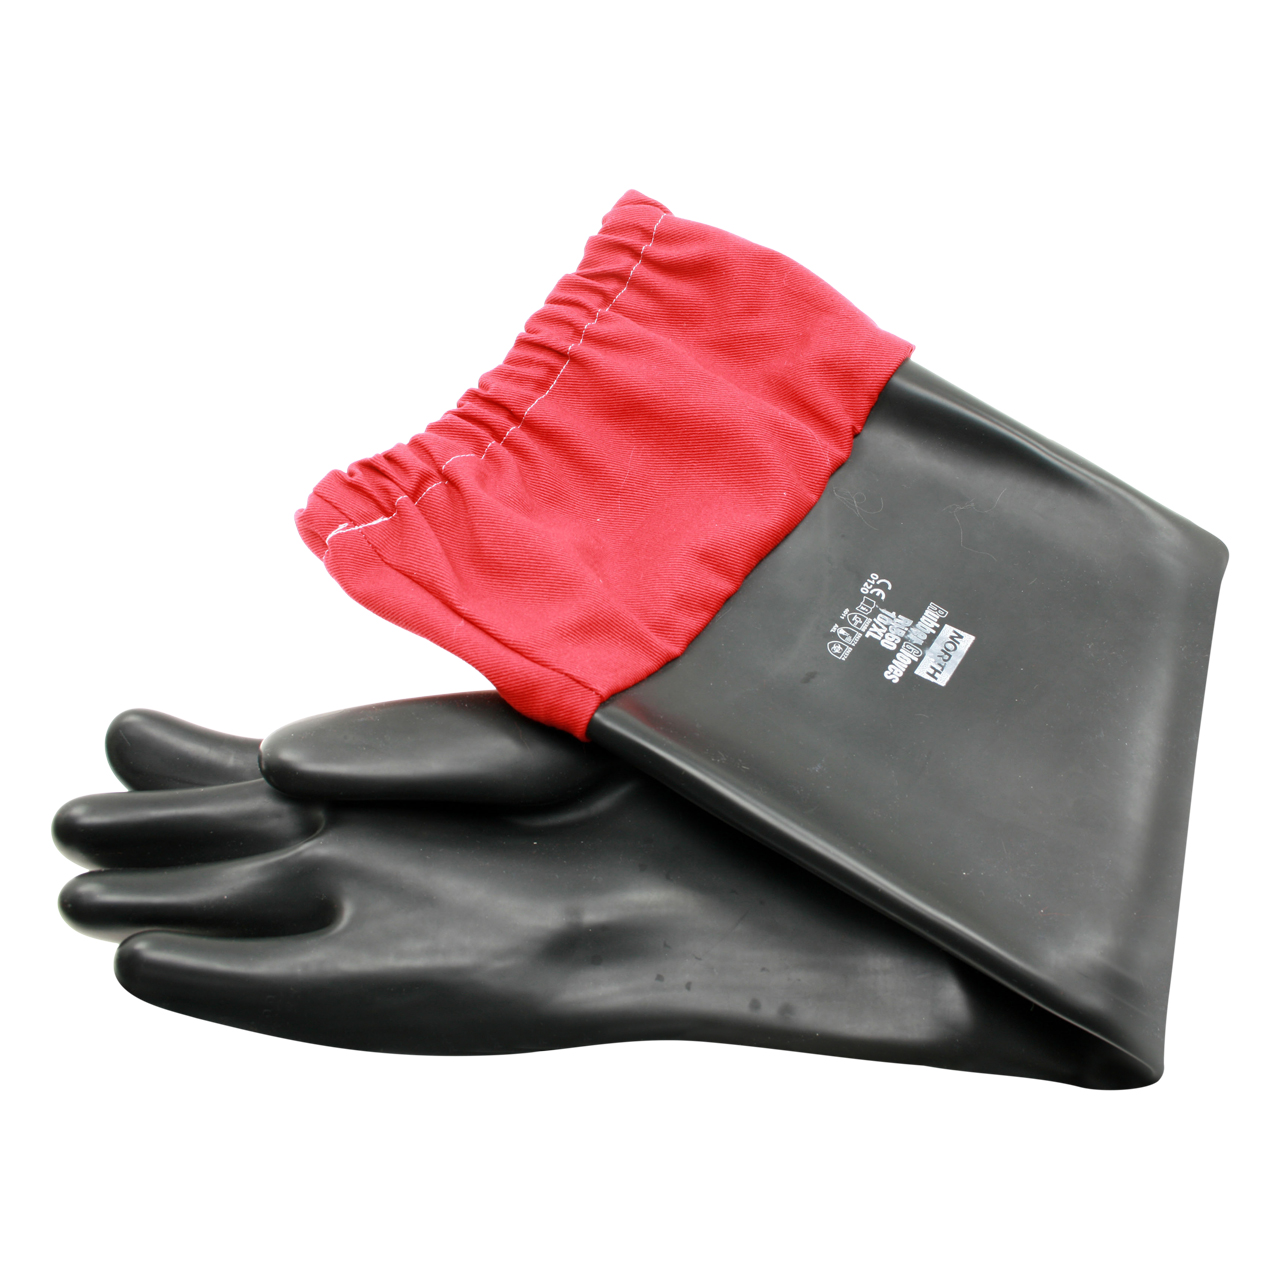 Armlange Industrie Gummihandschuhe 70cm extra lang Rubber Gloves 70cm #120 - 